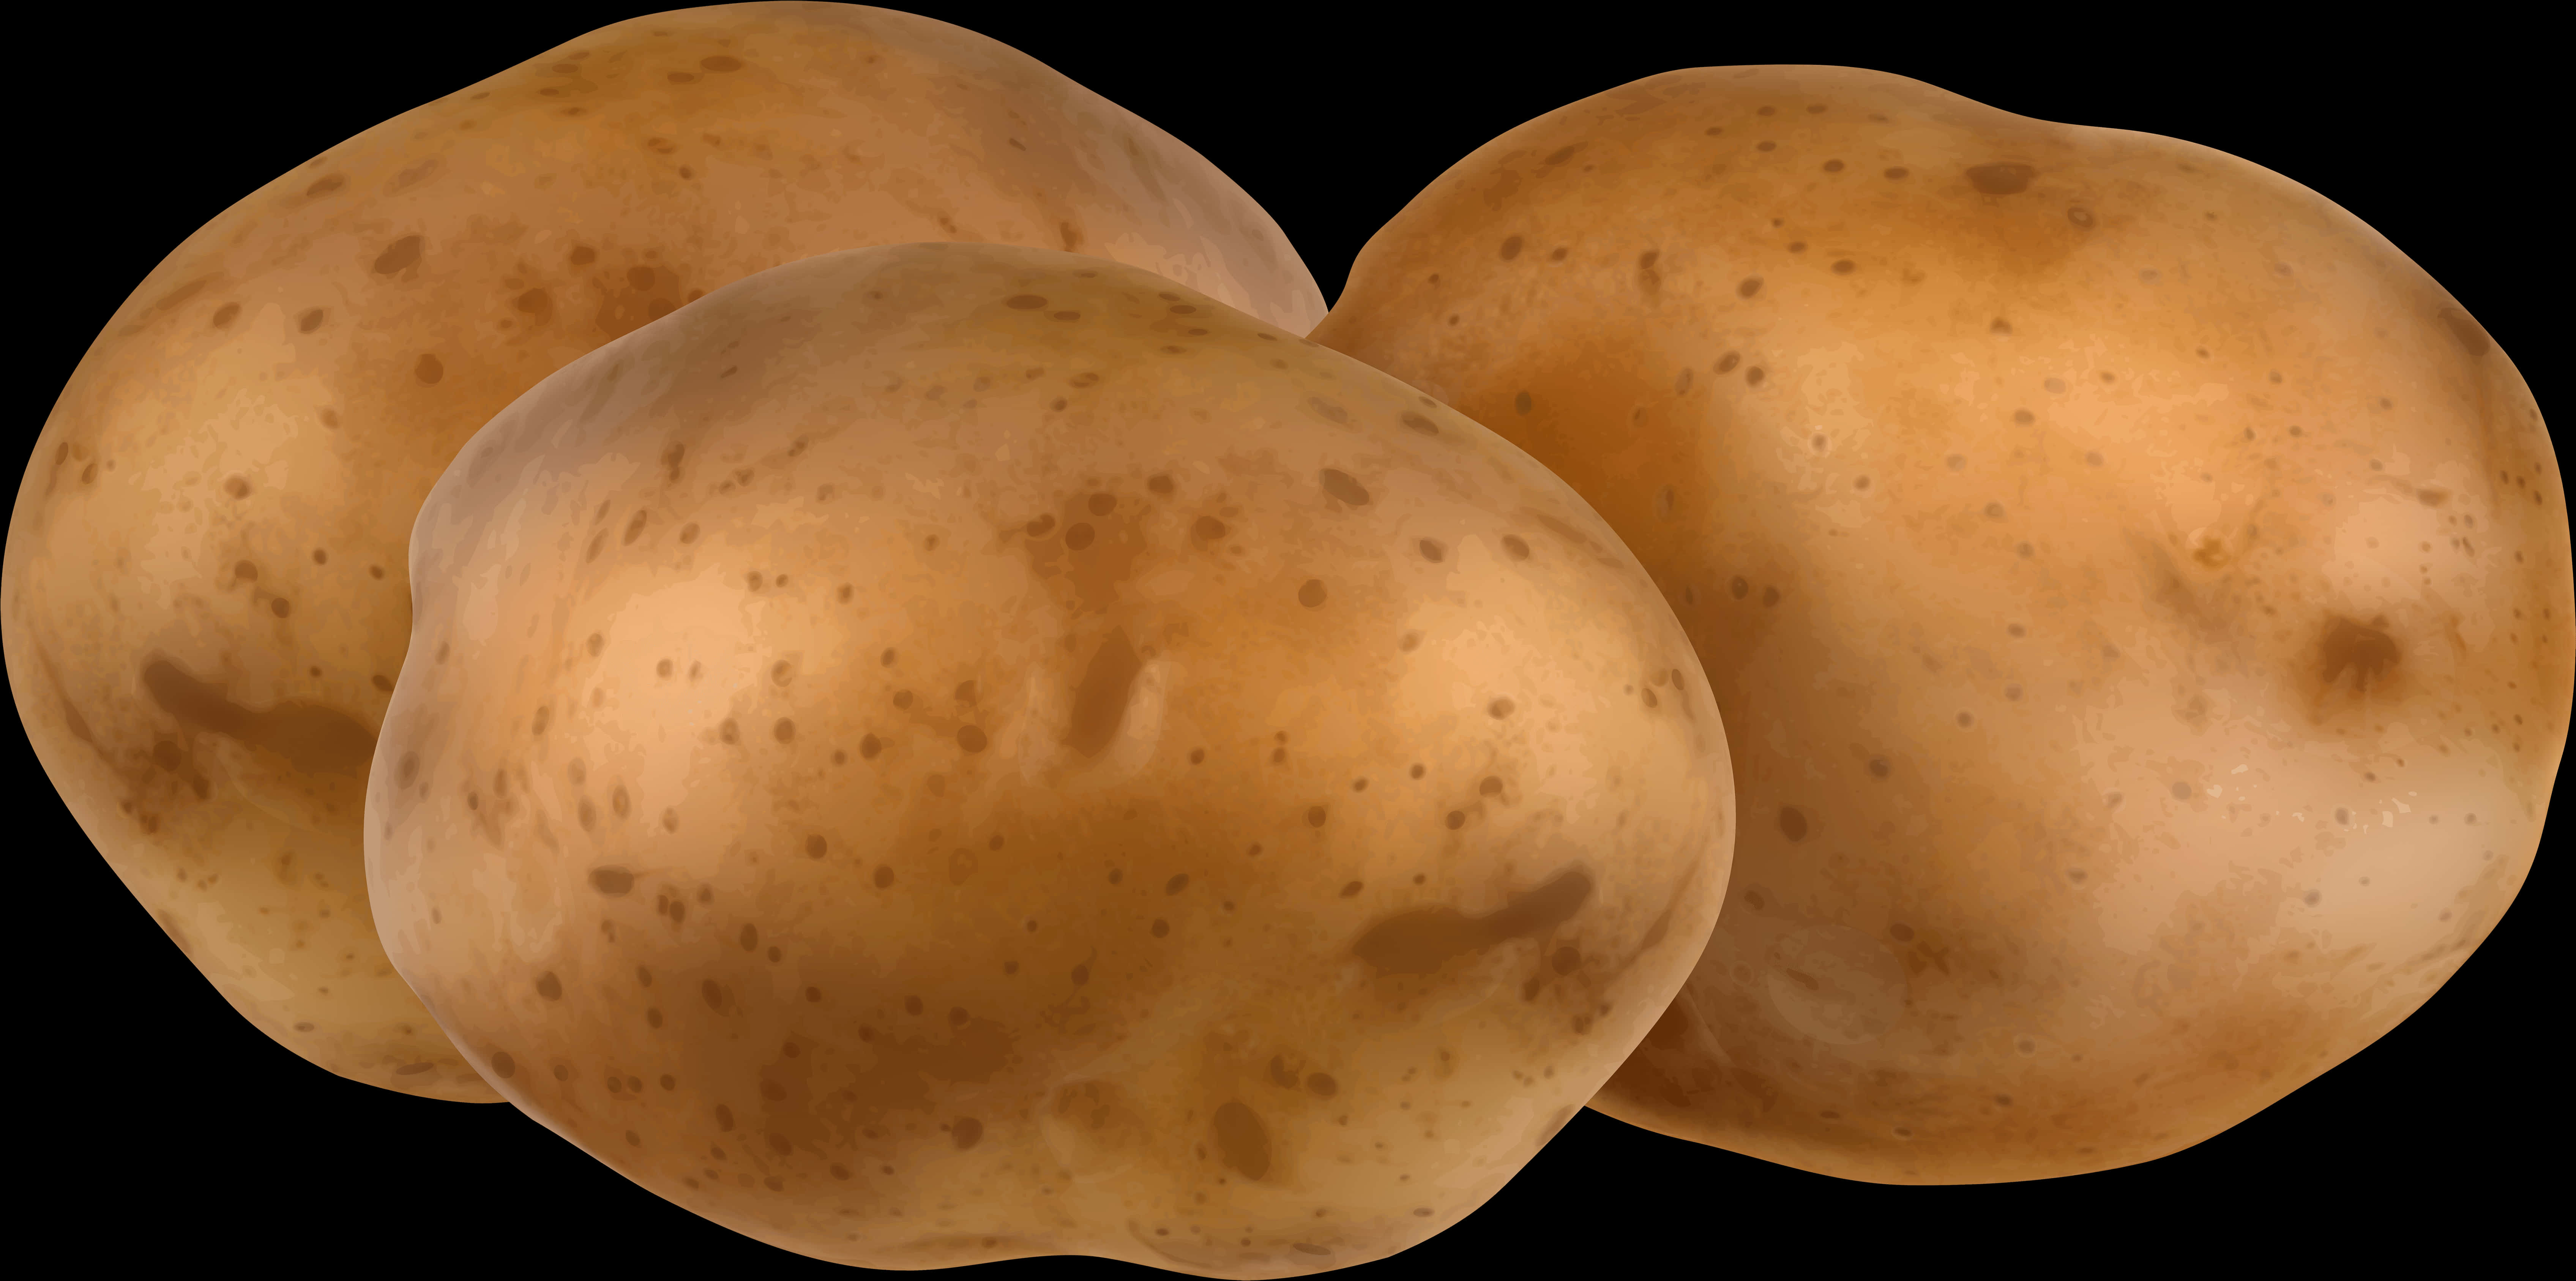 Fresh Potatoes Black Background PNG